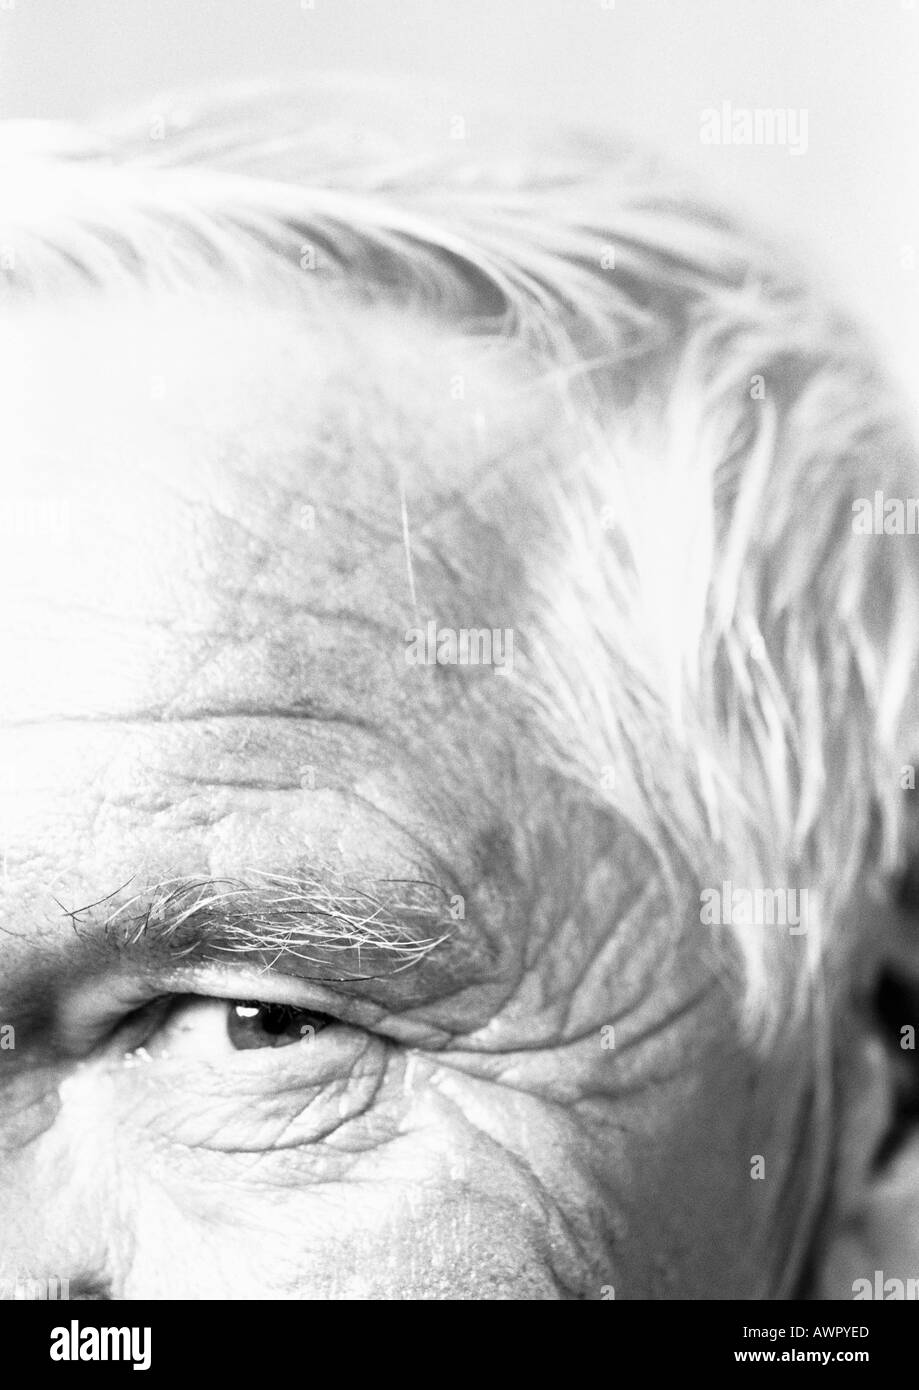 Elderly man looking at camera, partial view, close-up, b&w Stock Photo